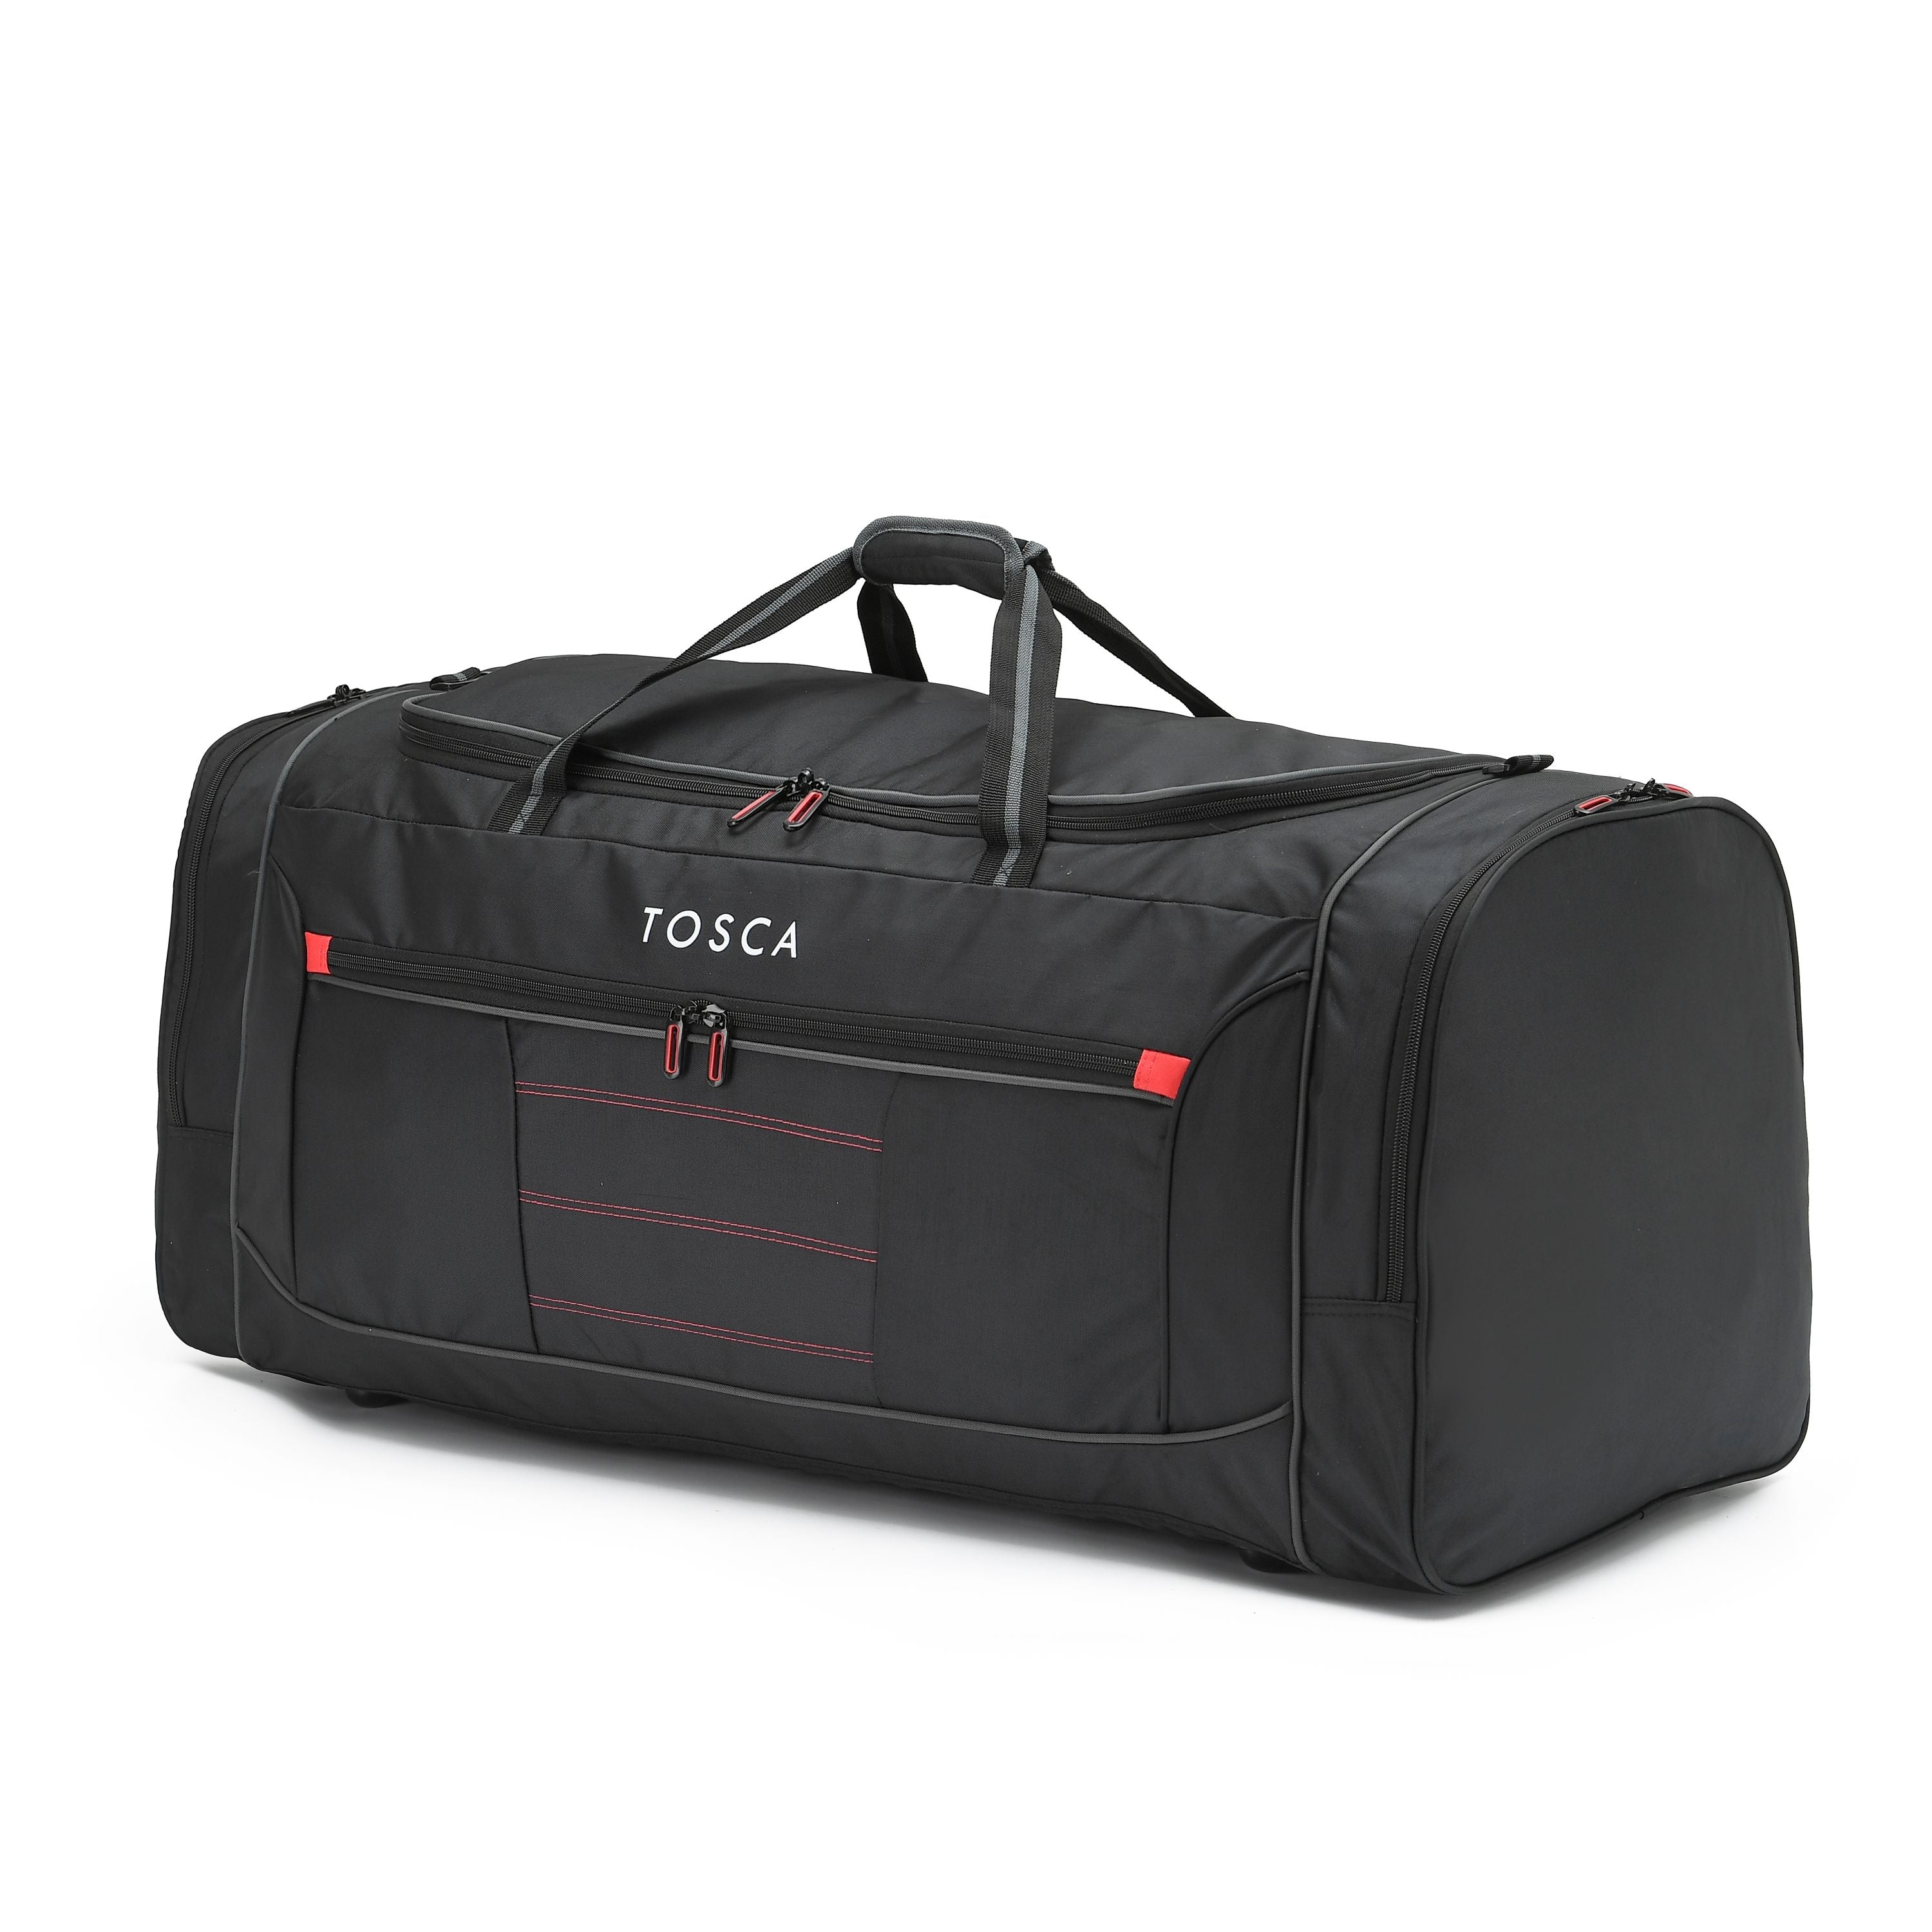 Tosca - TCA794J 90cm Jumbo Duffle Bag - Black/Red-2